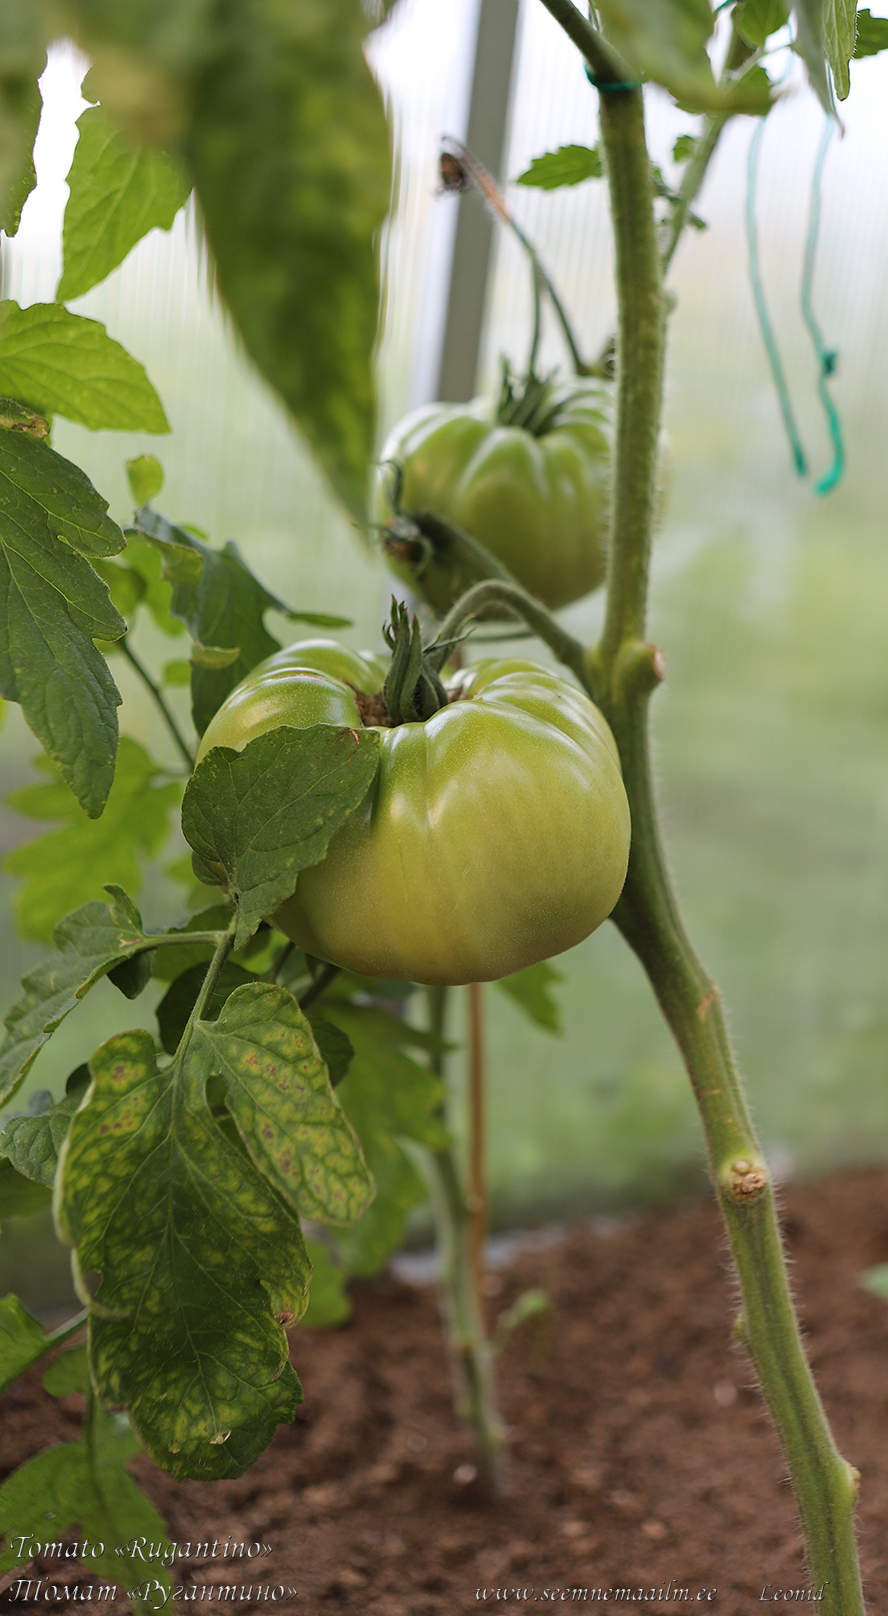 Beef tomato Rugantino F1 Tomaatti, Биф-томат Ругантино с выраженными рёбрами семенных камер